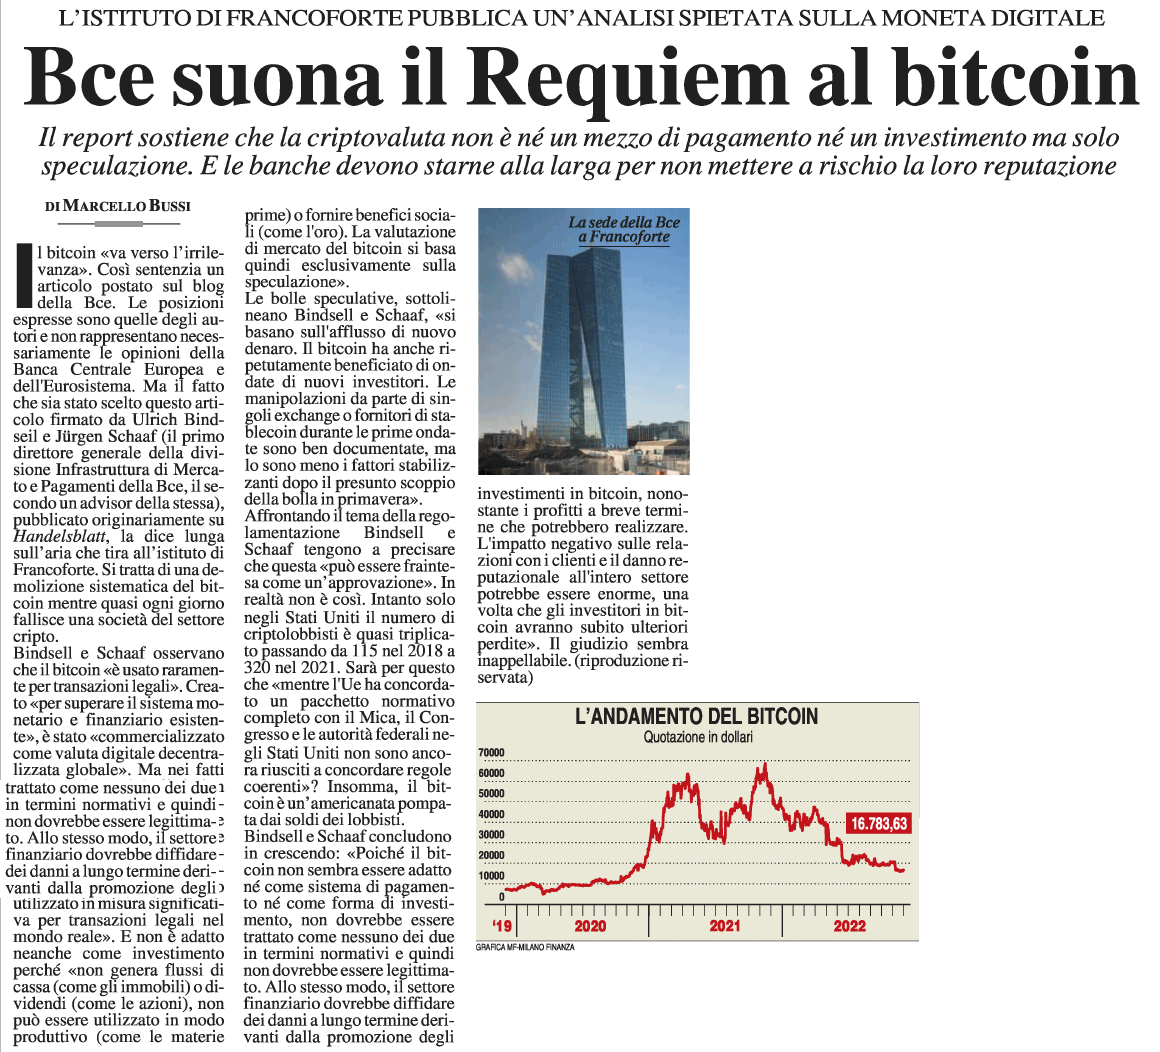 Bce suona il Requiem al bitcoin